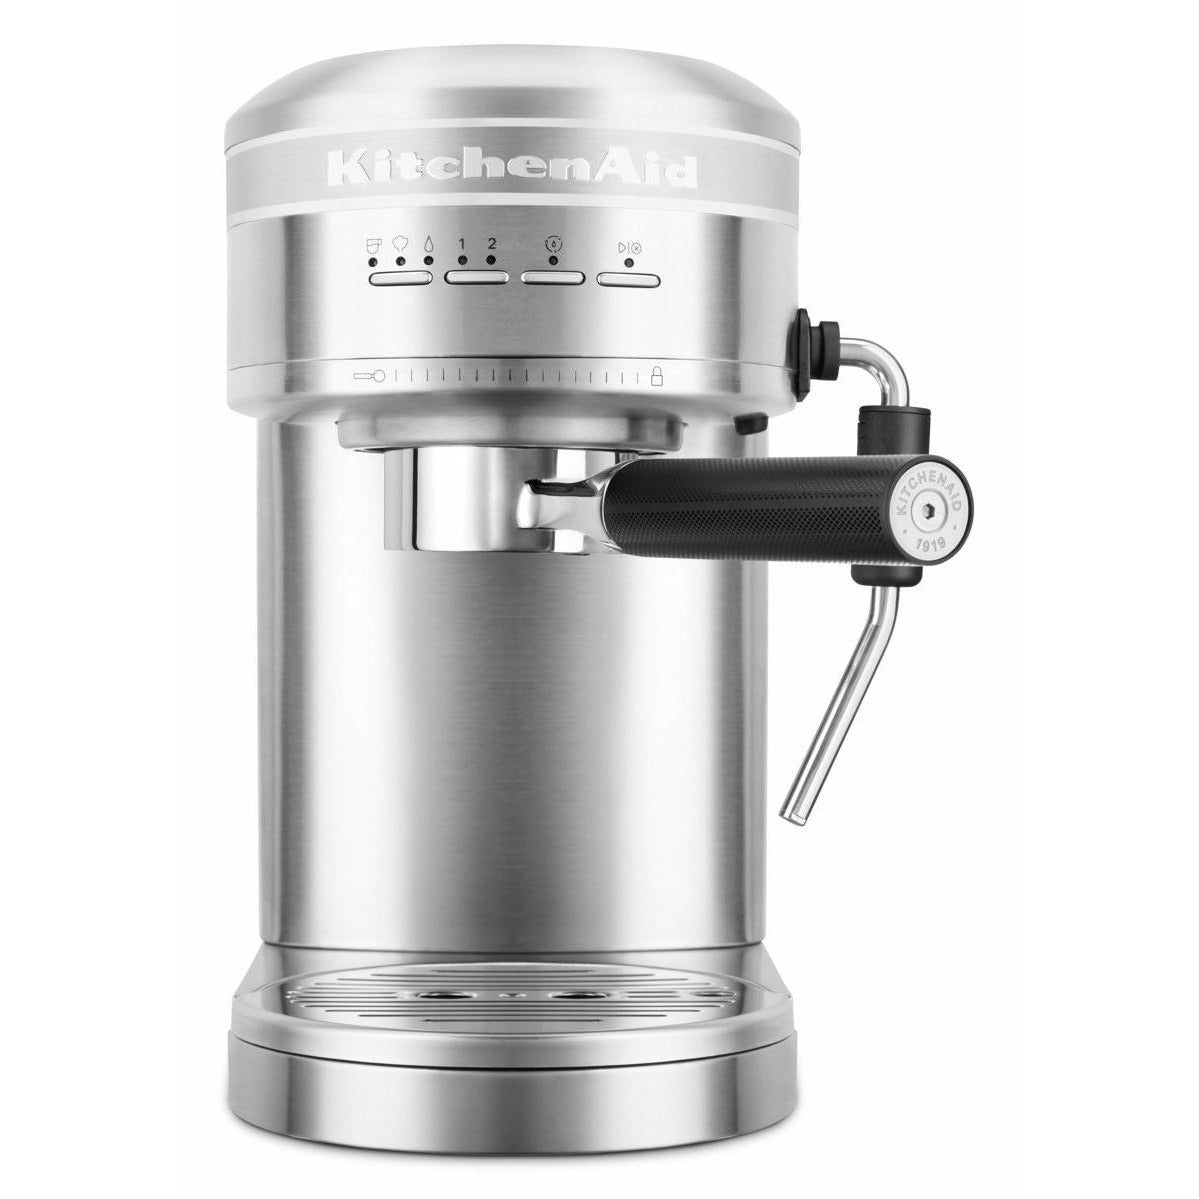 KitchenAid 5KES6503 Artisan Espresso Machine, Chrome